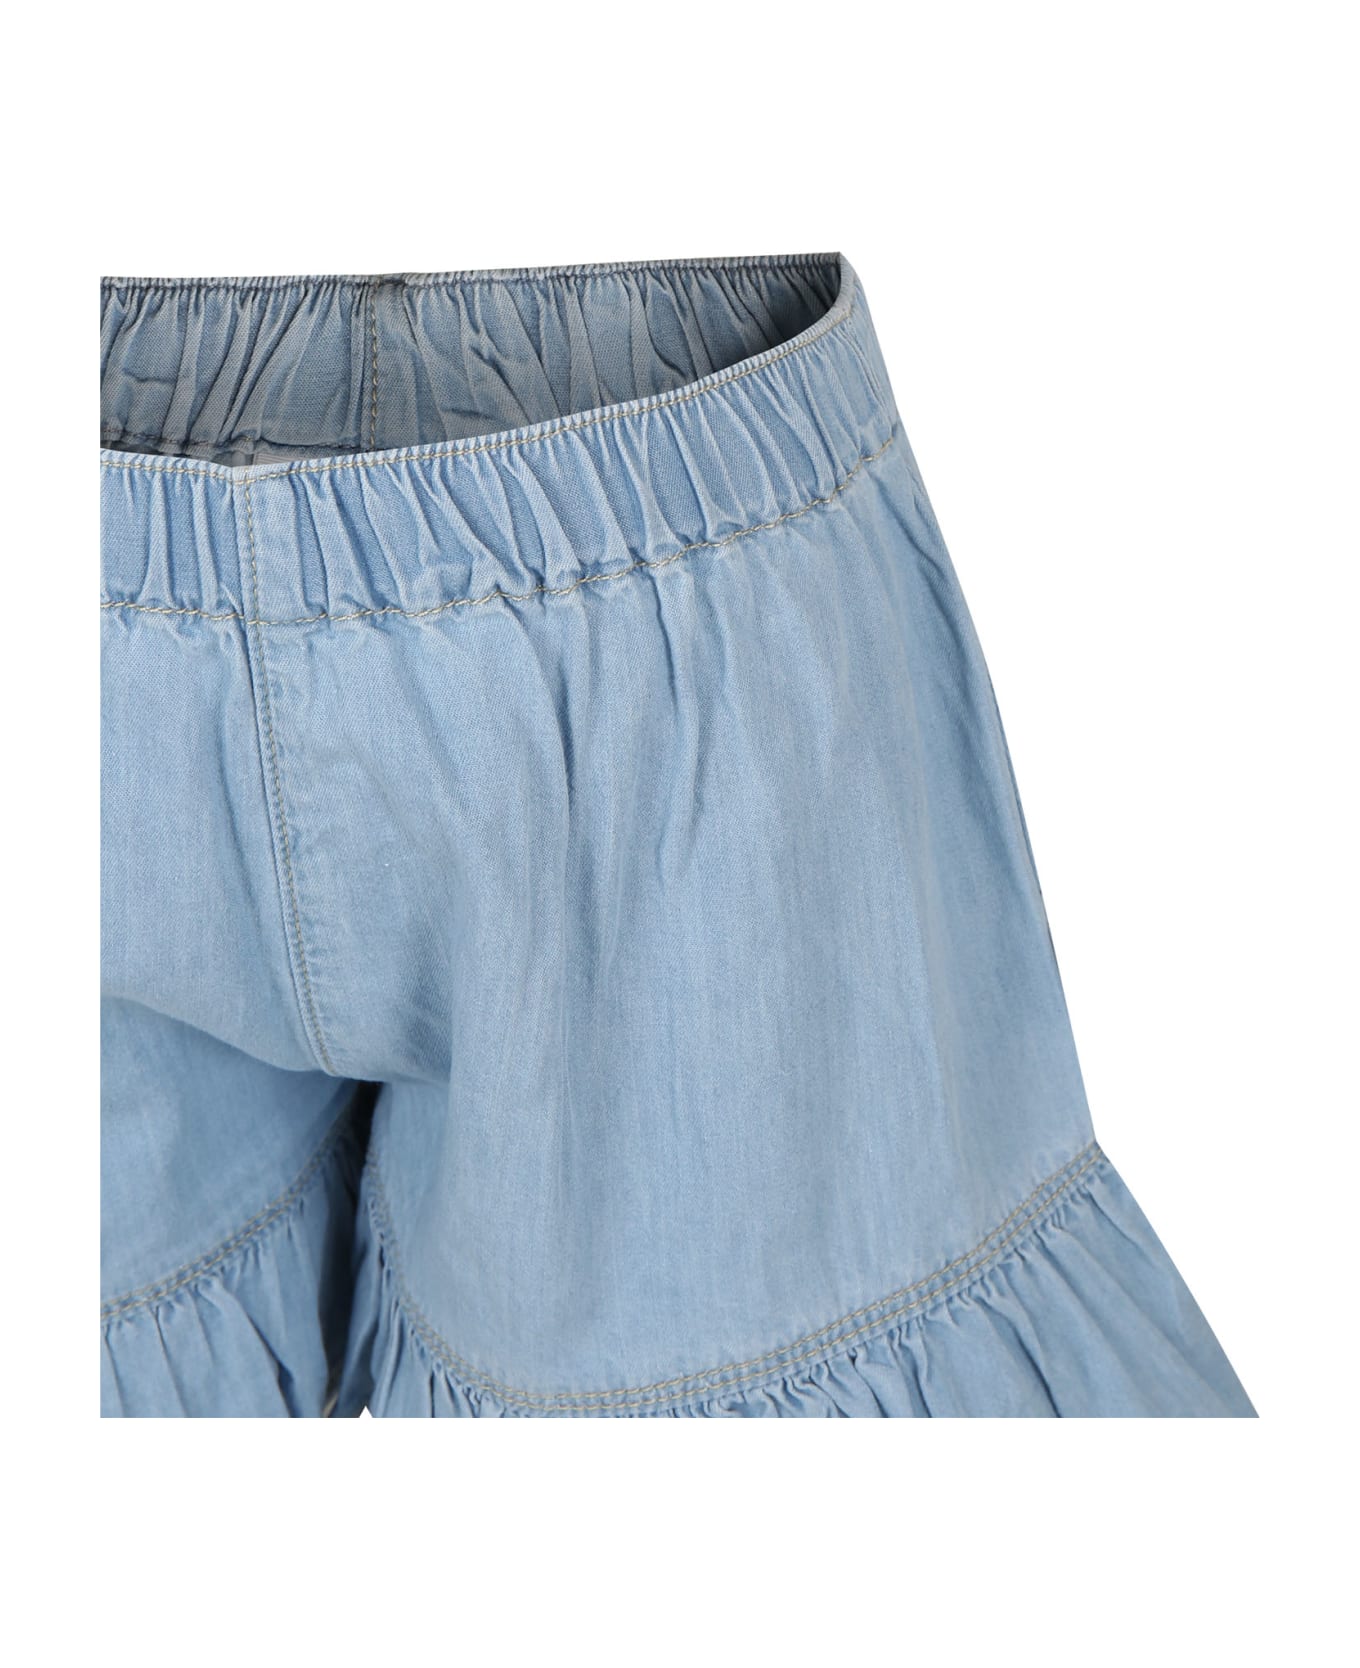 Molo Blue Shorts For Girl - Denim ボトムス